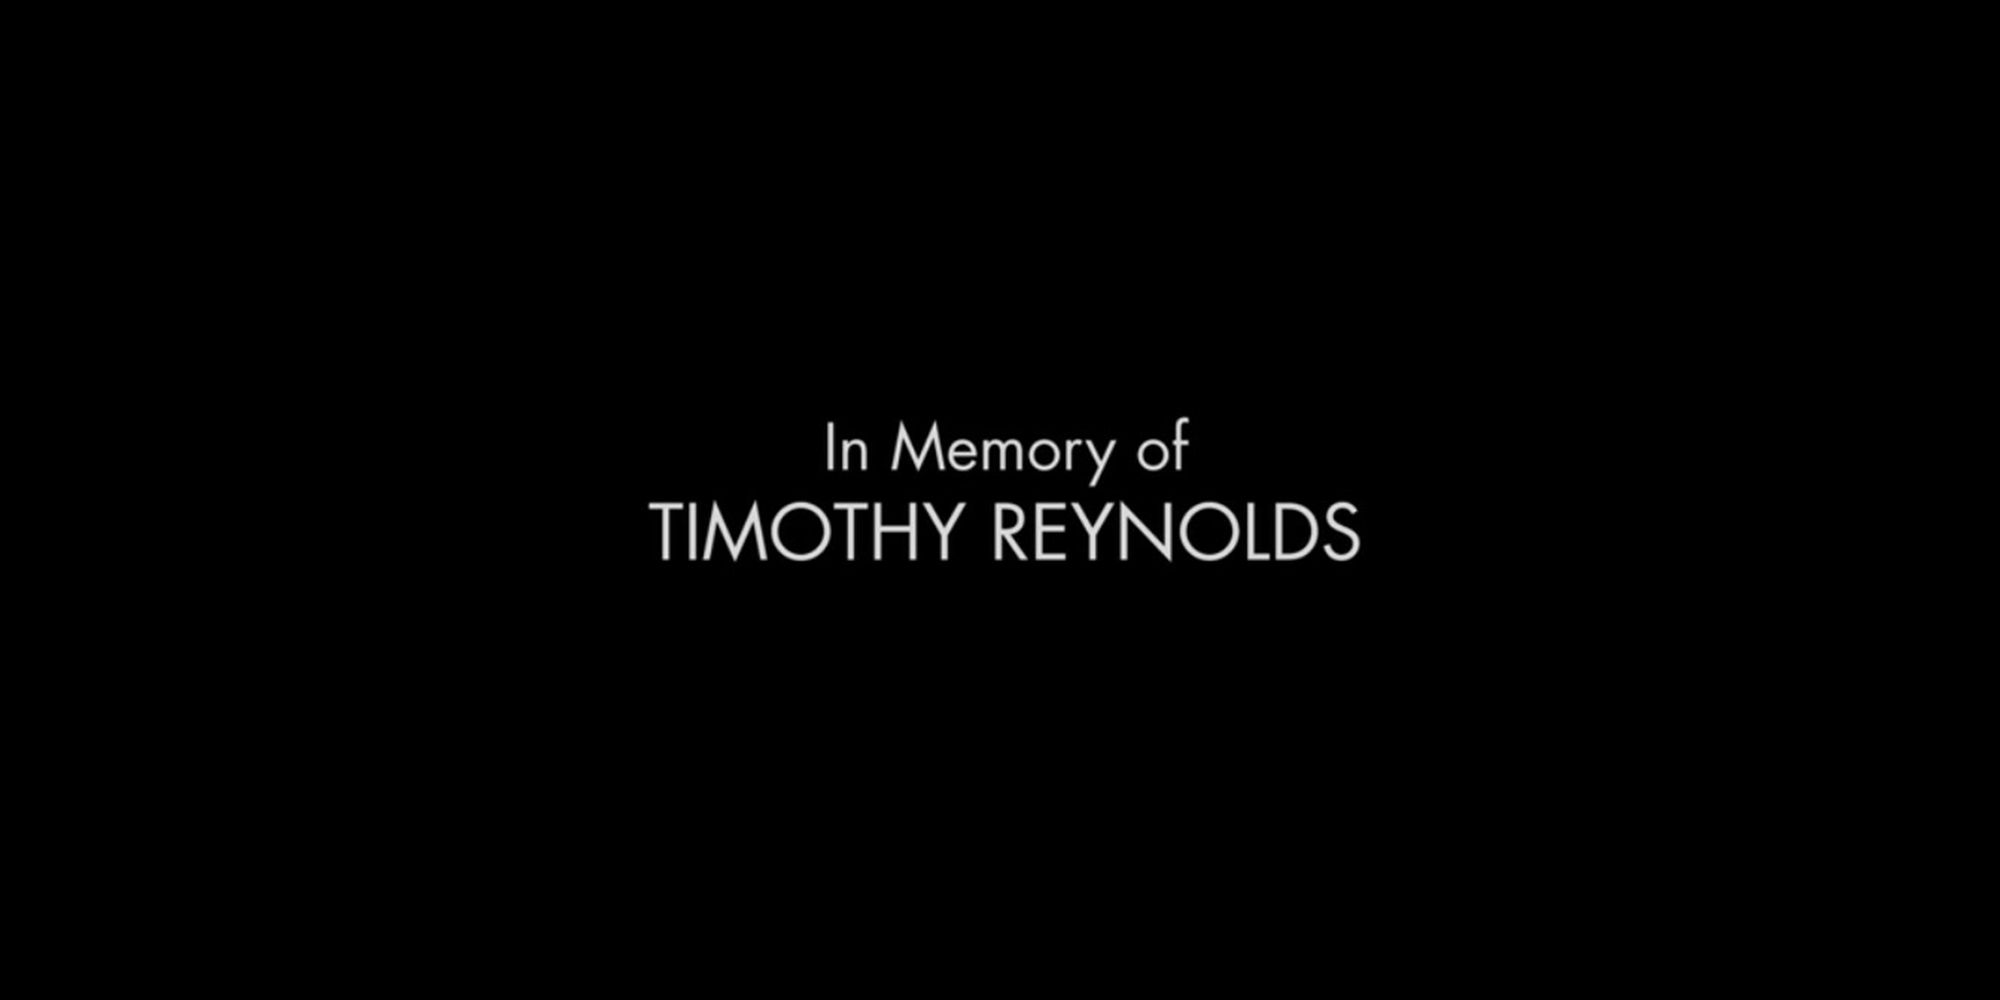 Como Timothy Reynolds de Yellowstone morreu?